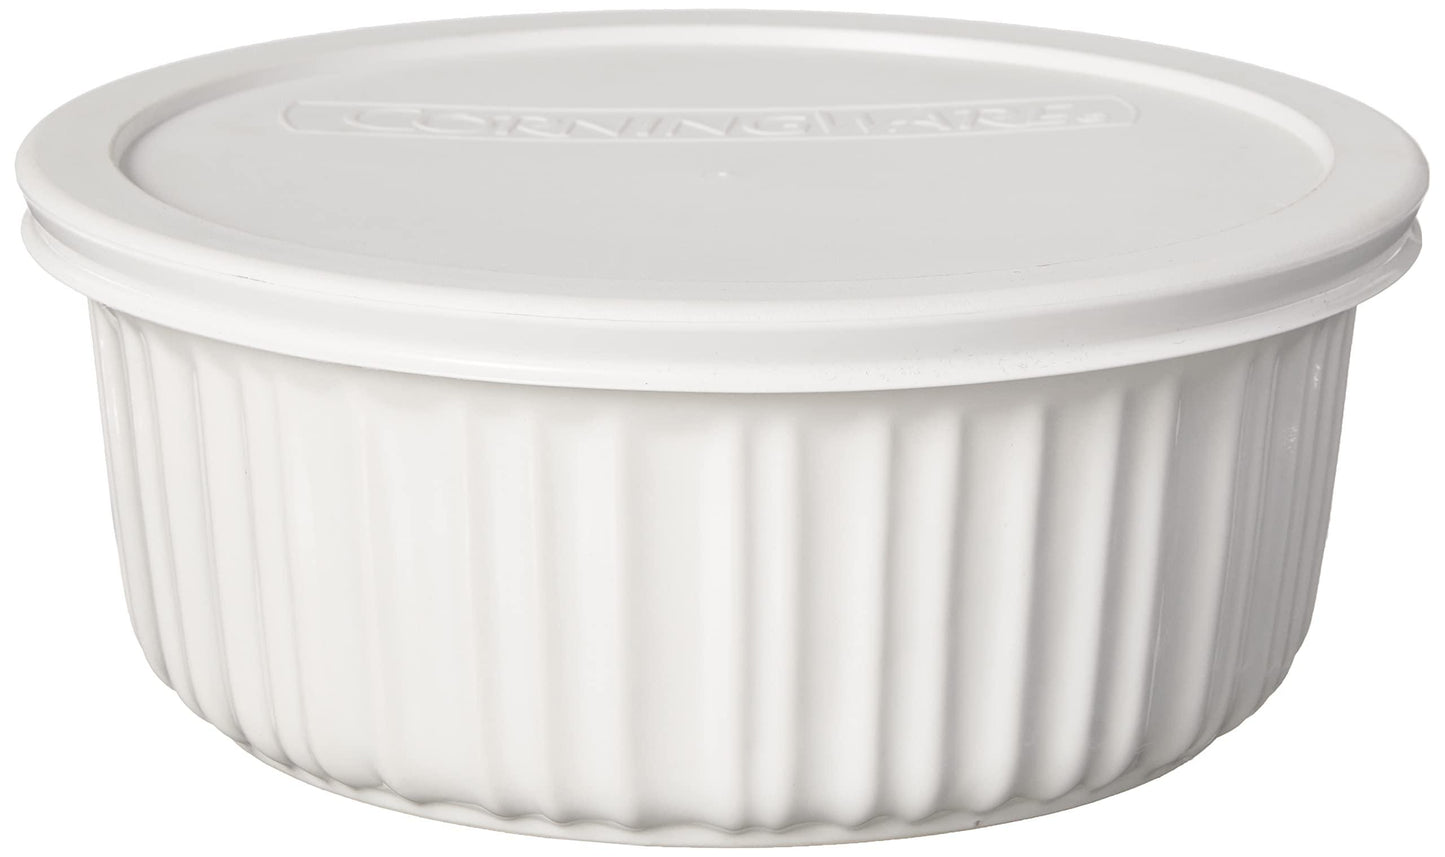 CorningWare French White 7-Pc Ceramic Bakeware Set with Lids, Chip and Crack Resistant Stoneware Baking Dish, Microwave, Dishwasher, Oven, Freezer and Fridge Safe - CookCave